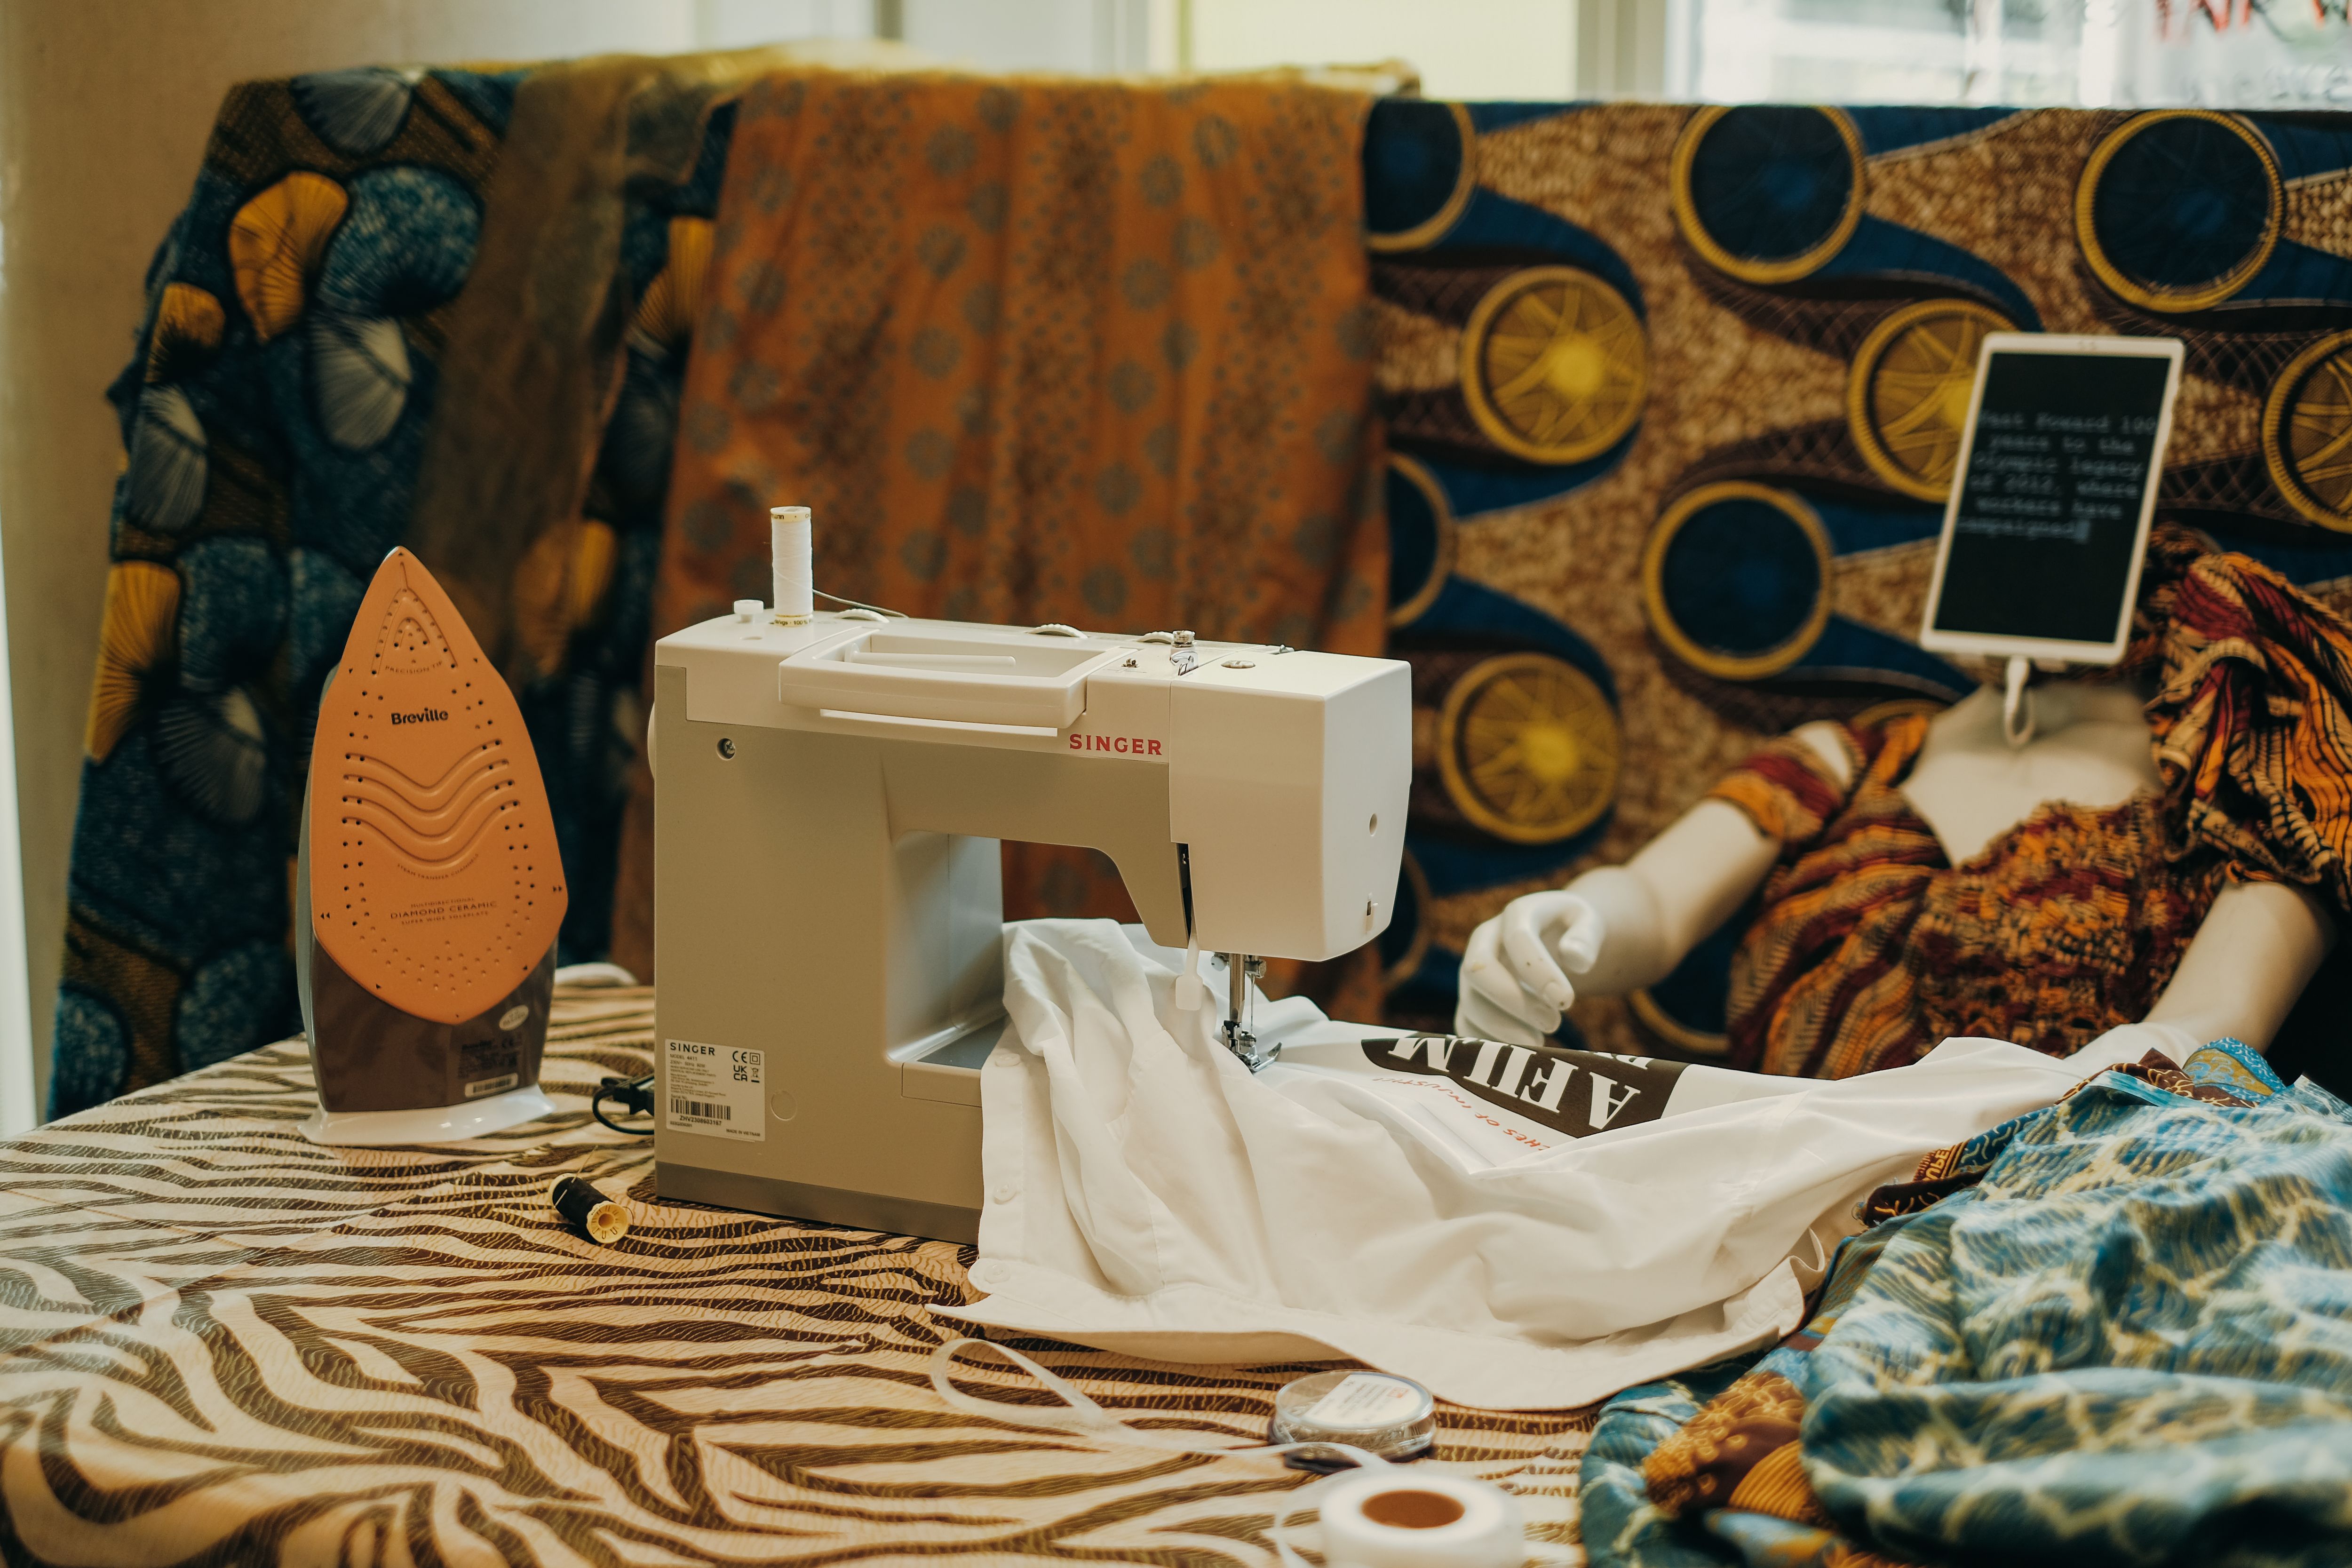 sewing machine and fabrics